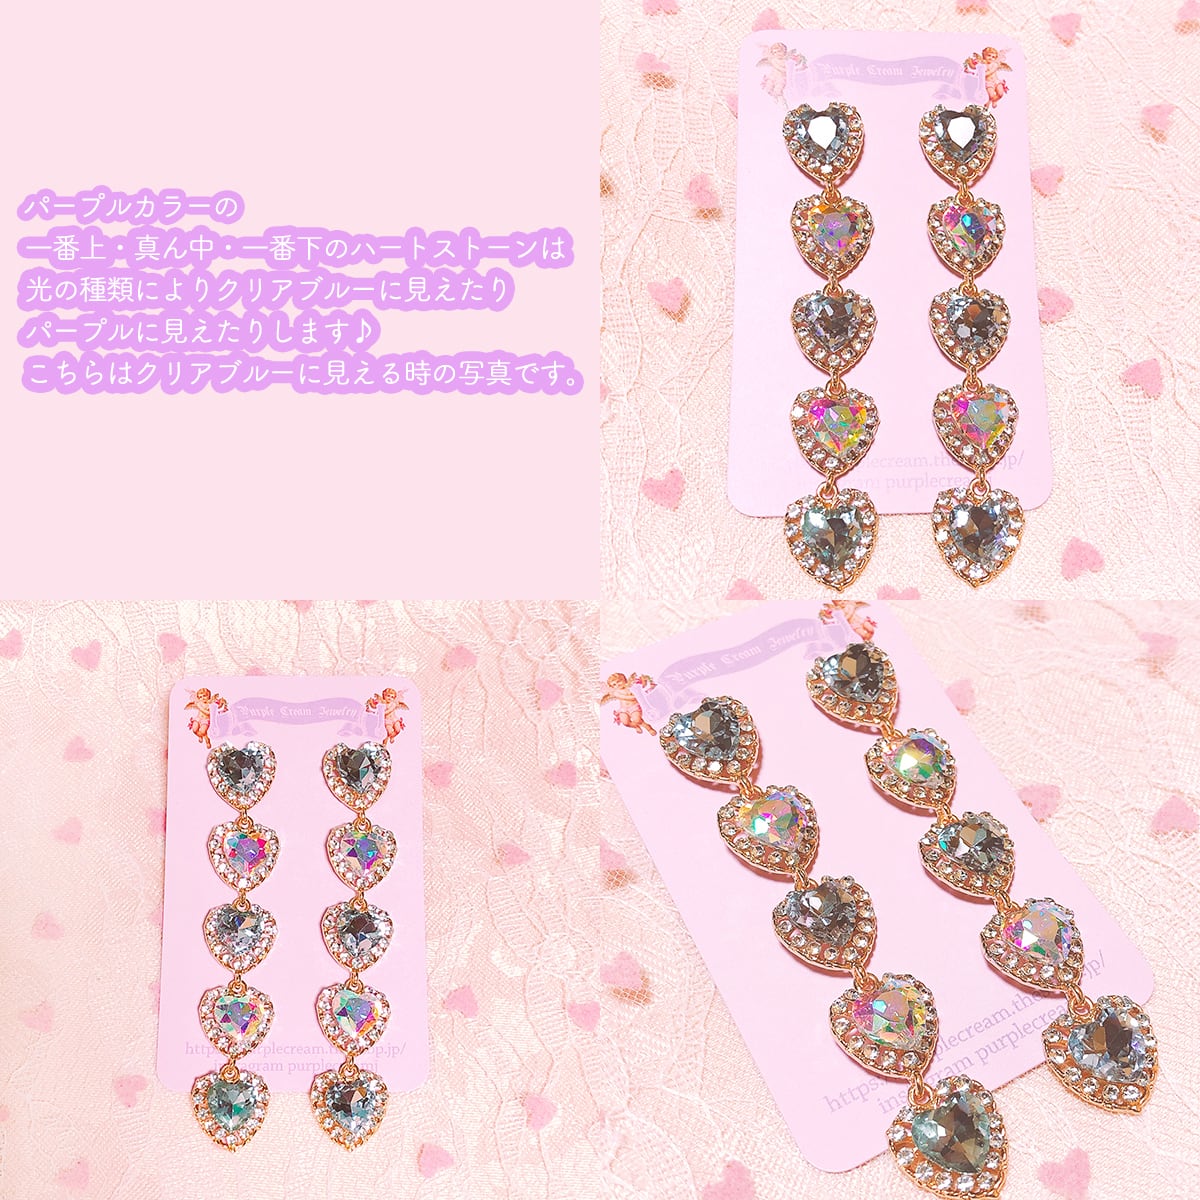 Purple Cream Sparkly Heart 5 Row Earrings P017 TWICE Nayeon Sana Earrings